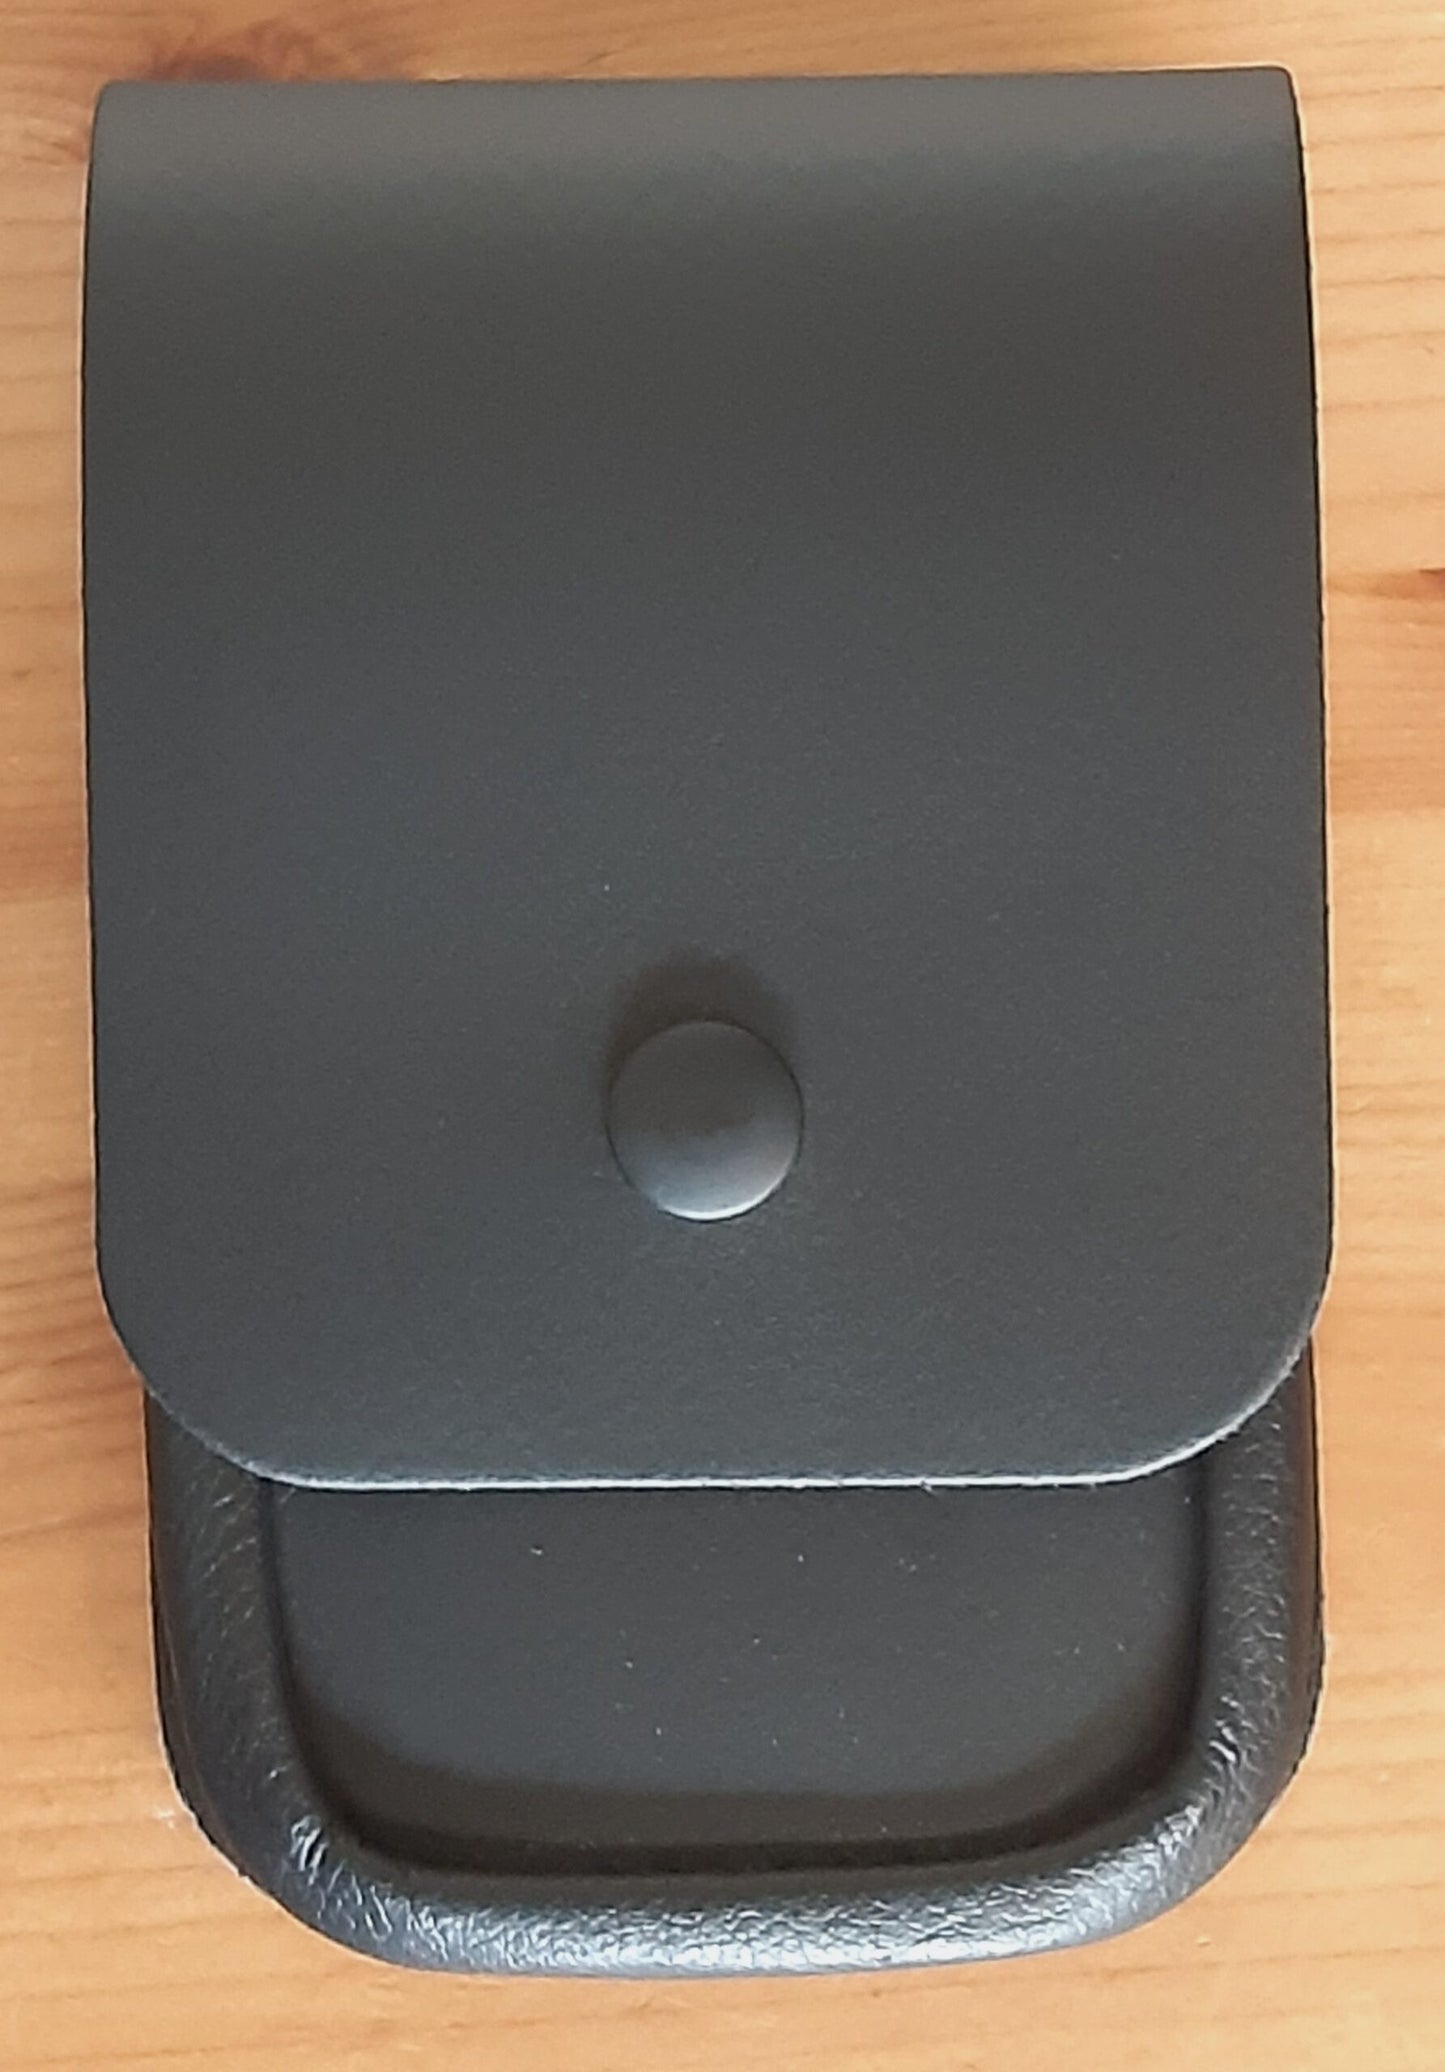 Leather Key Pouch (HMP)